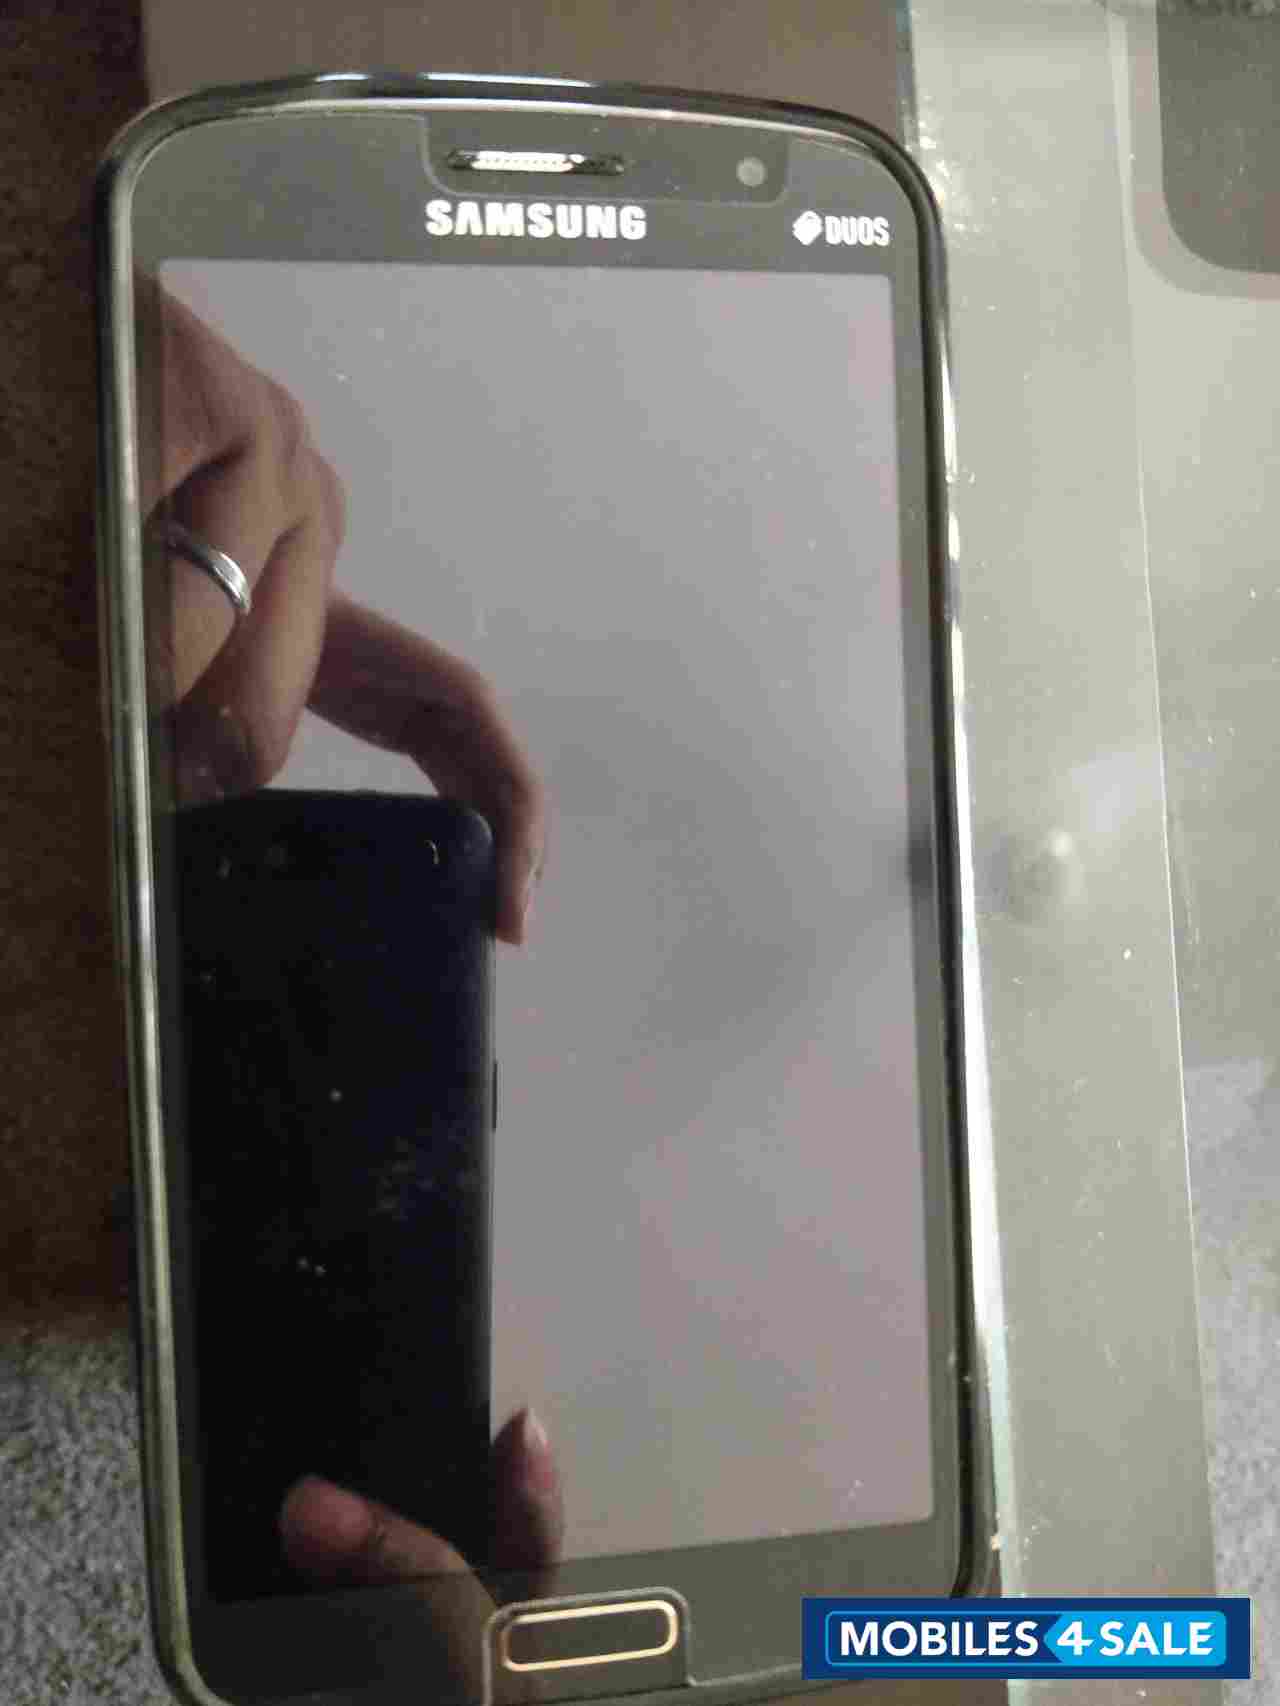 Samsung  Galaxy Grand 2